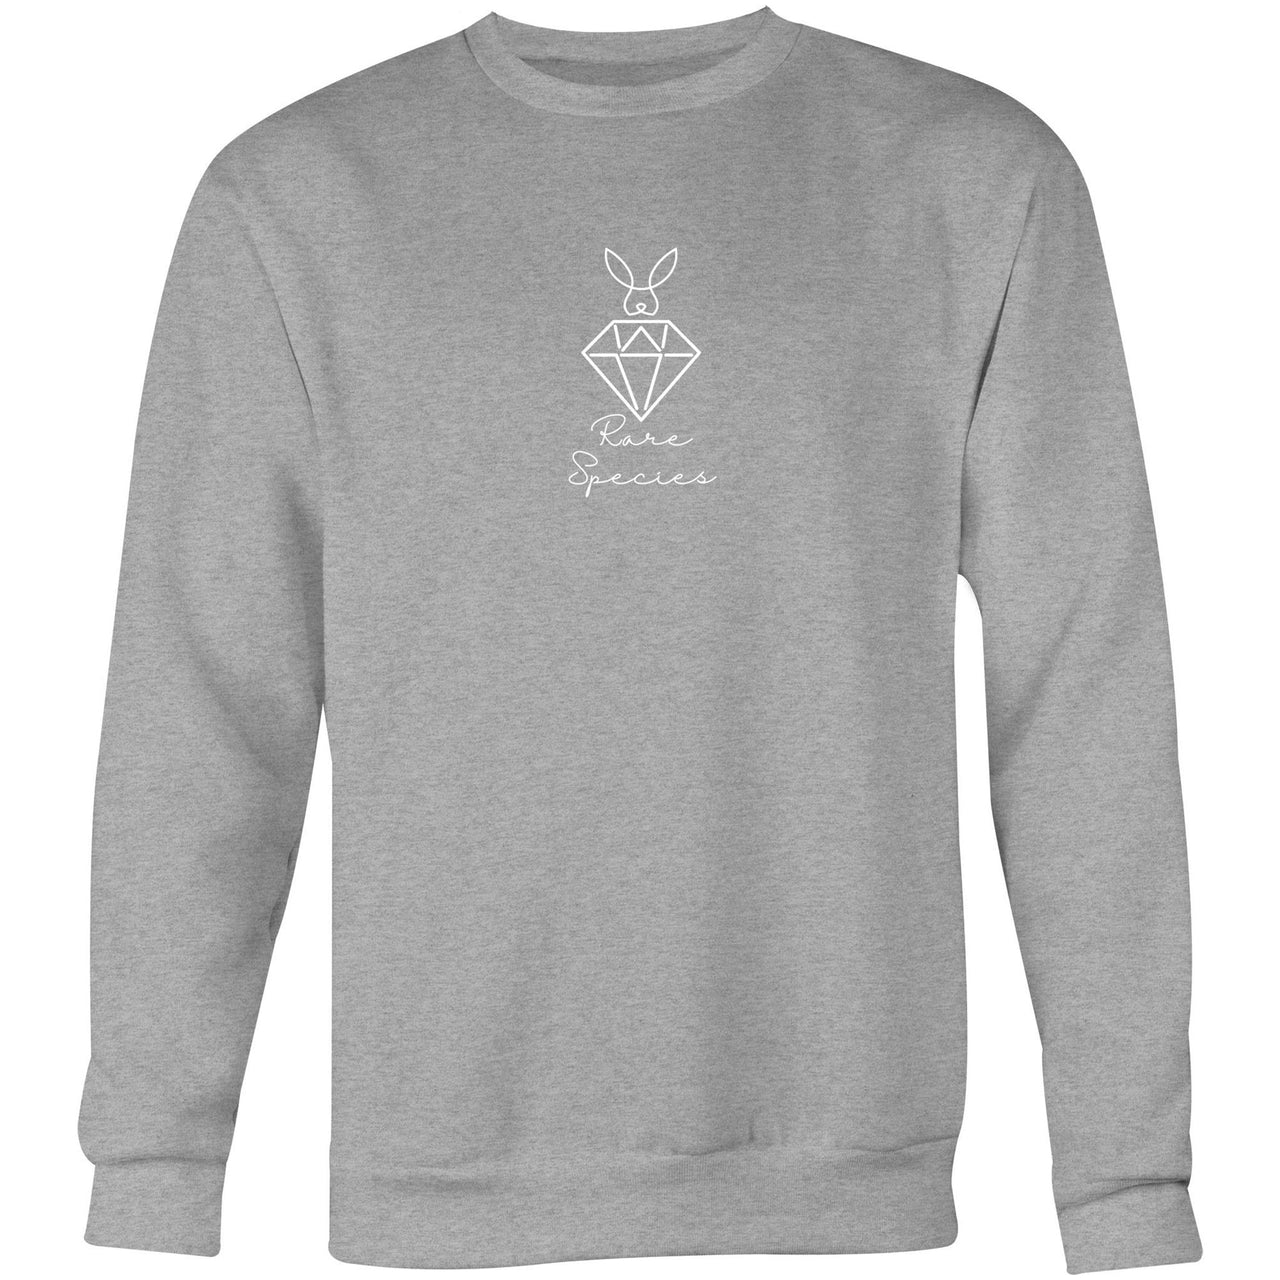 CBF Rare Species Crew Sweatshirt grey marle by CBF Clothing